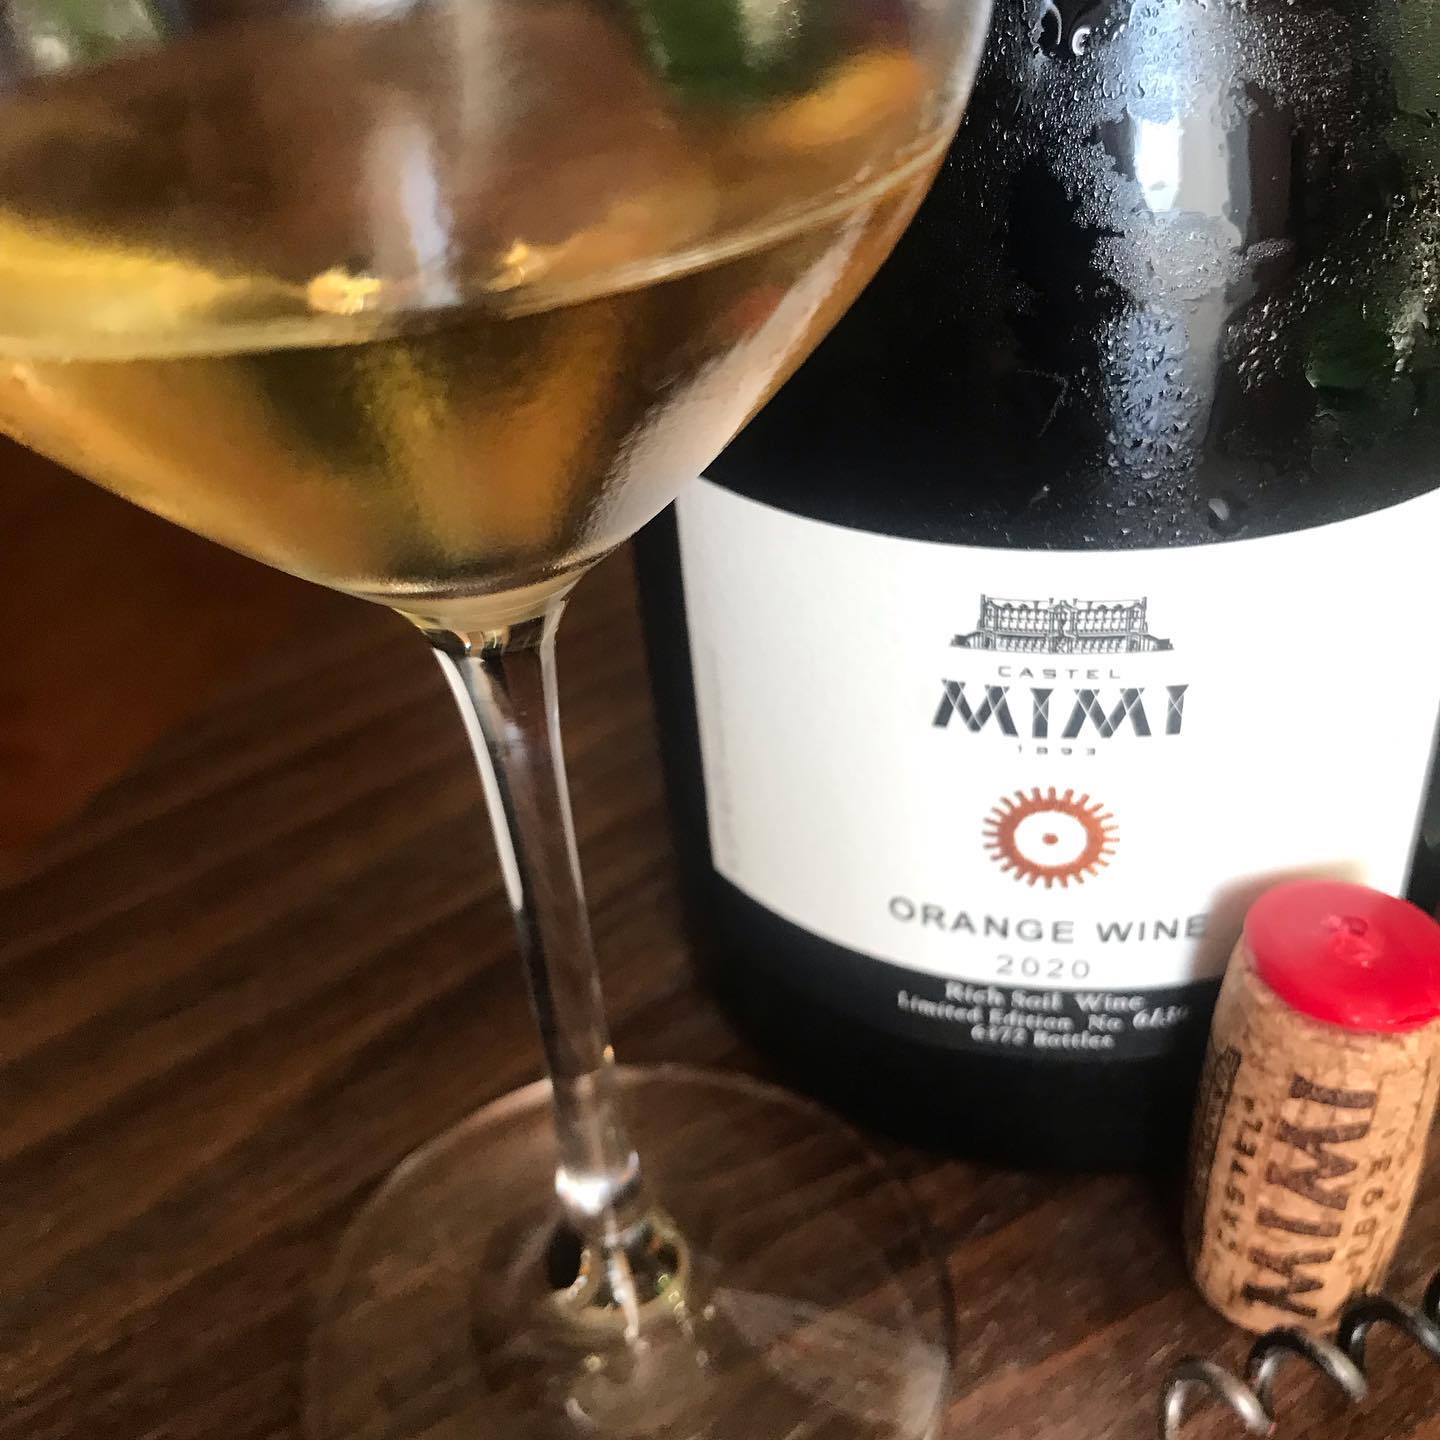 Castel Mimi Orange Wine 2020